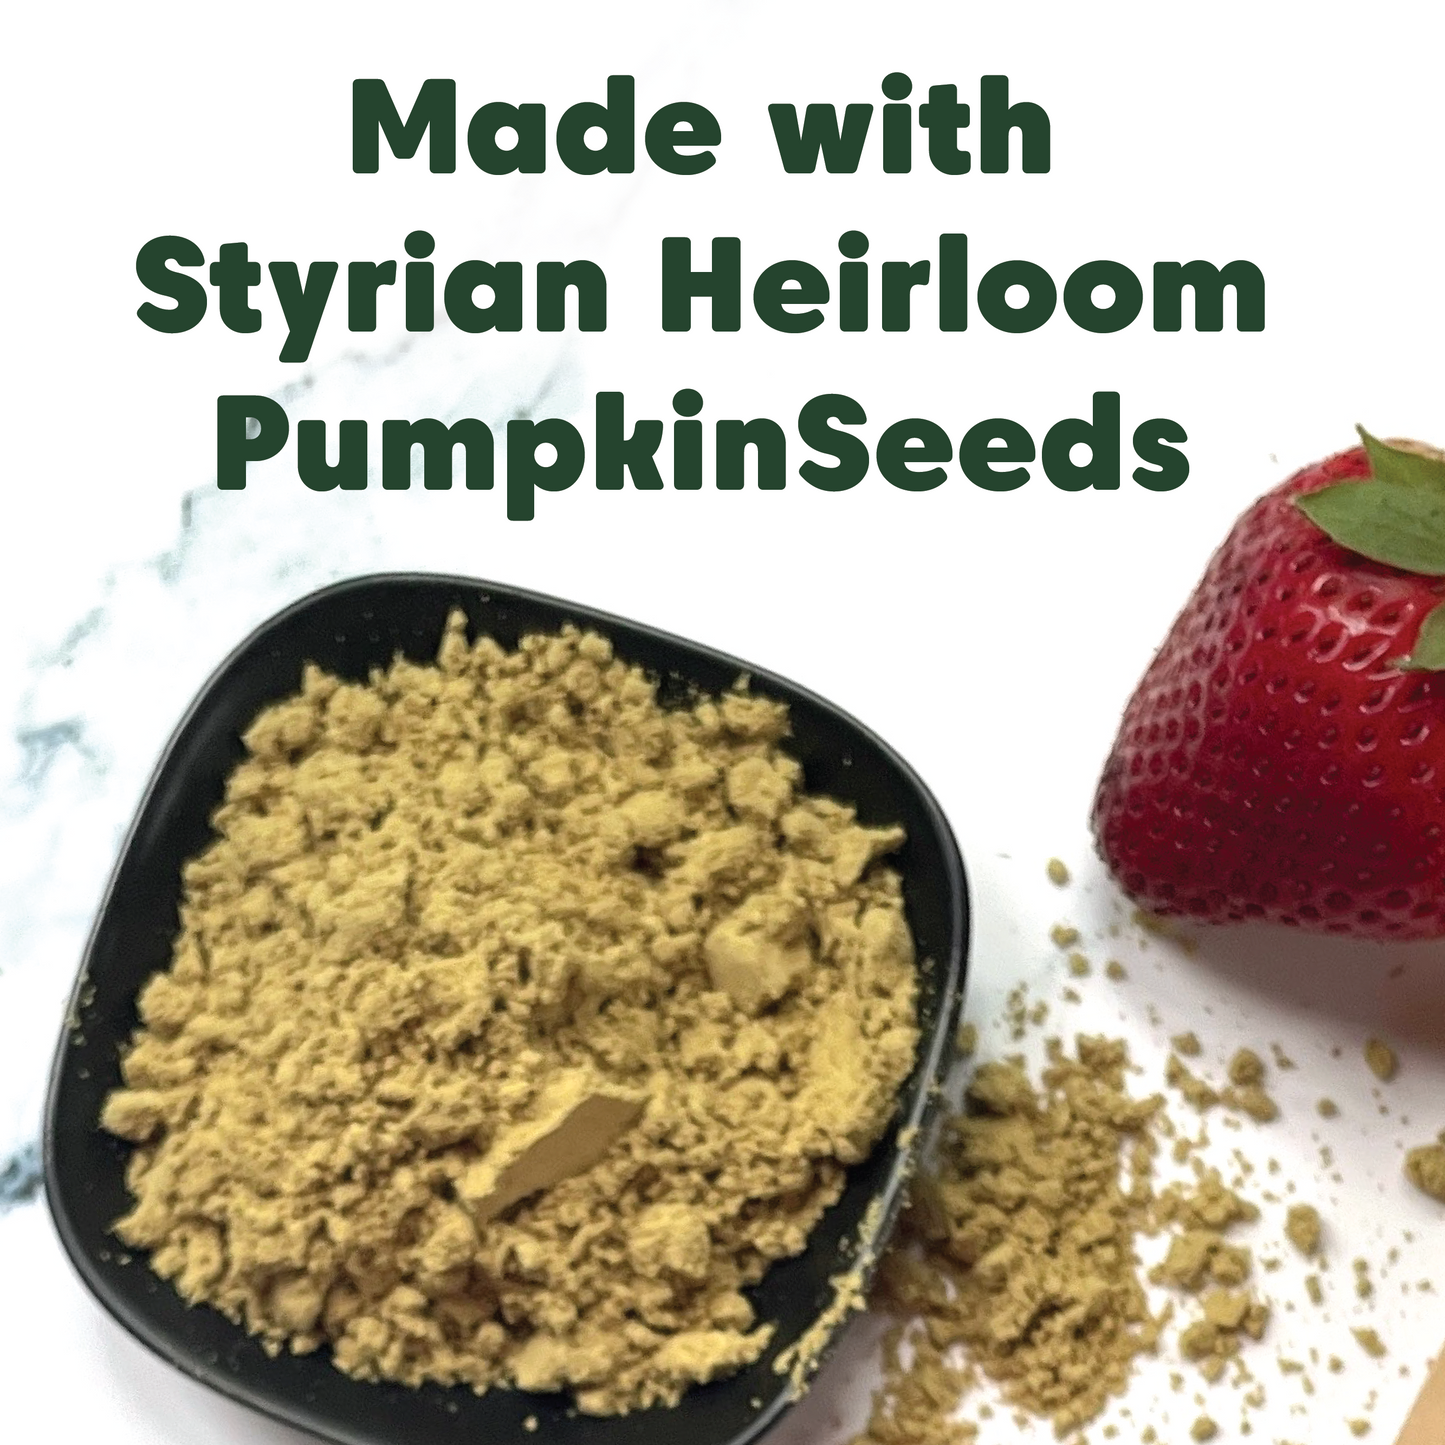 Pumpkin Seed Protein Powder - Austrian Grown, Organic